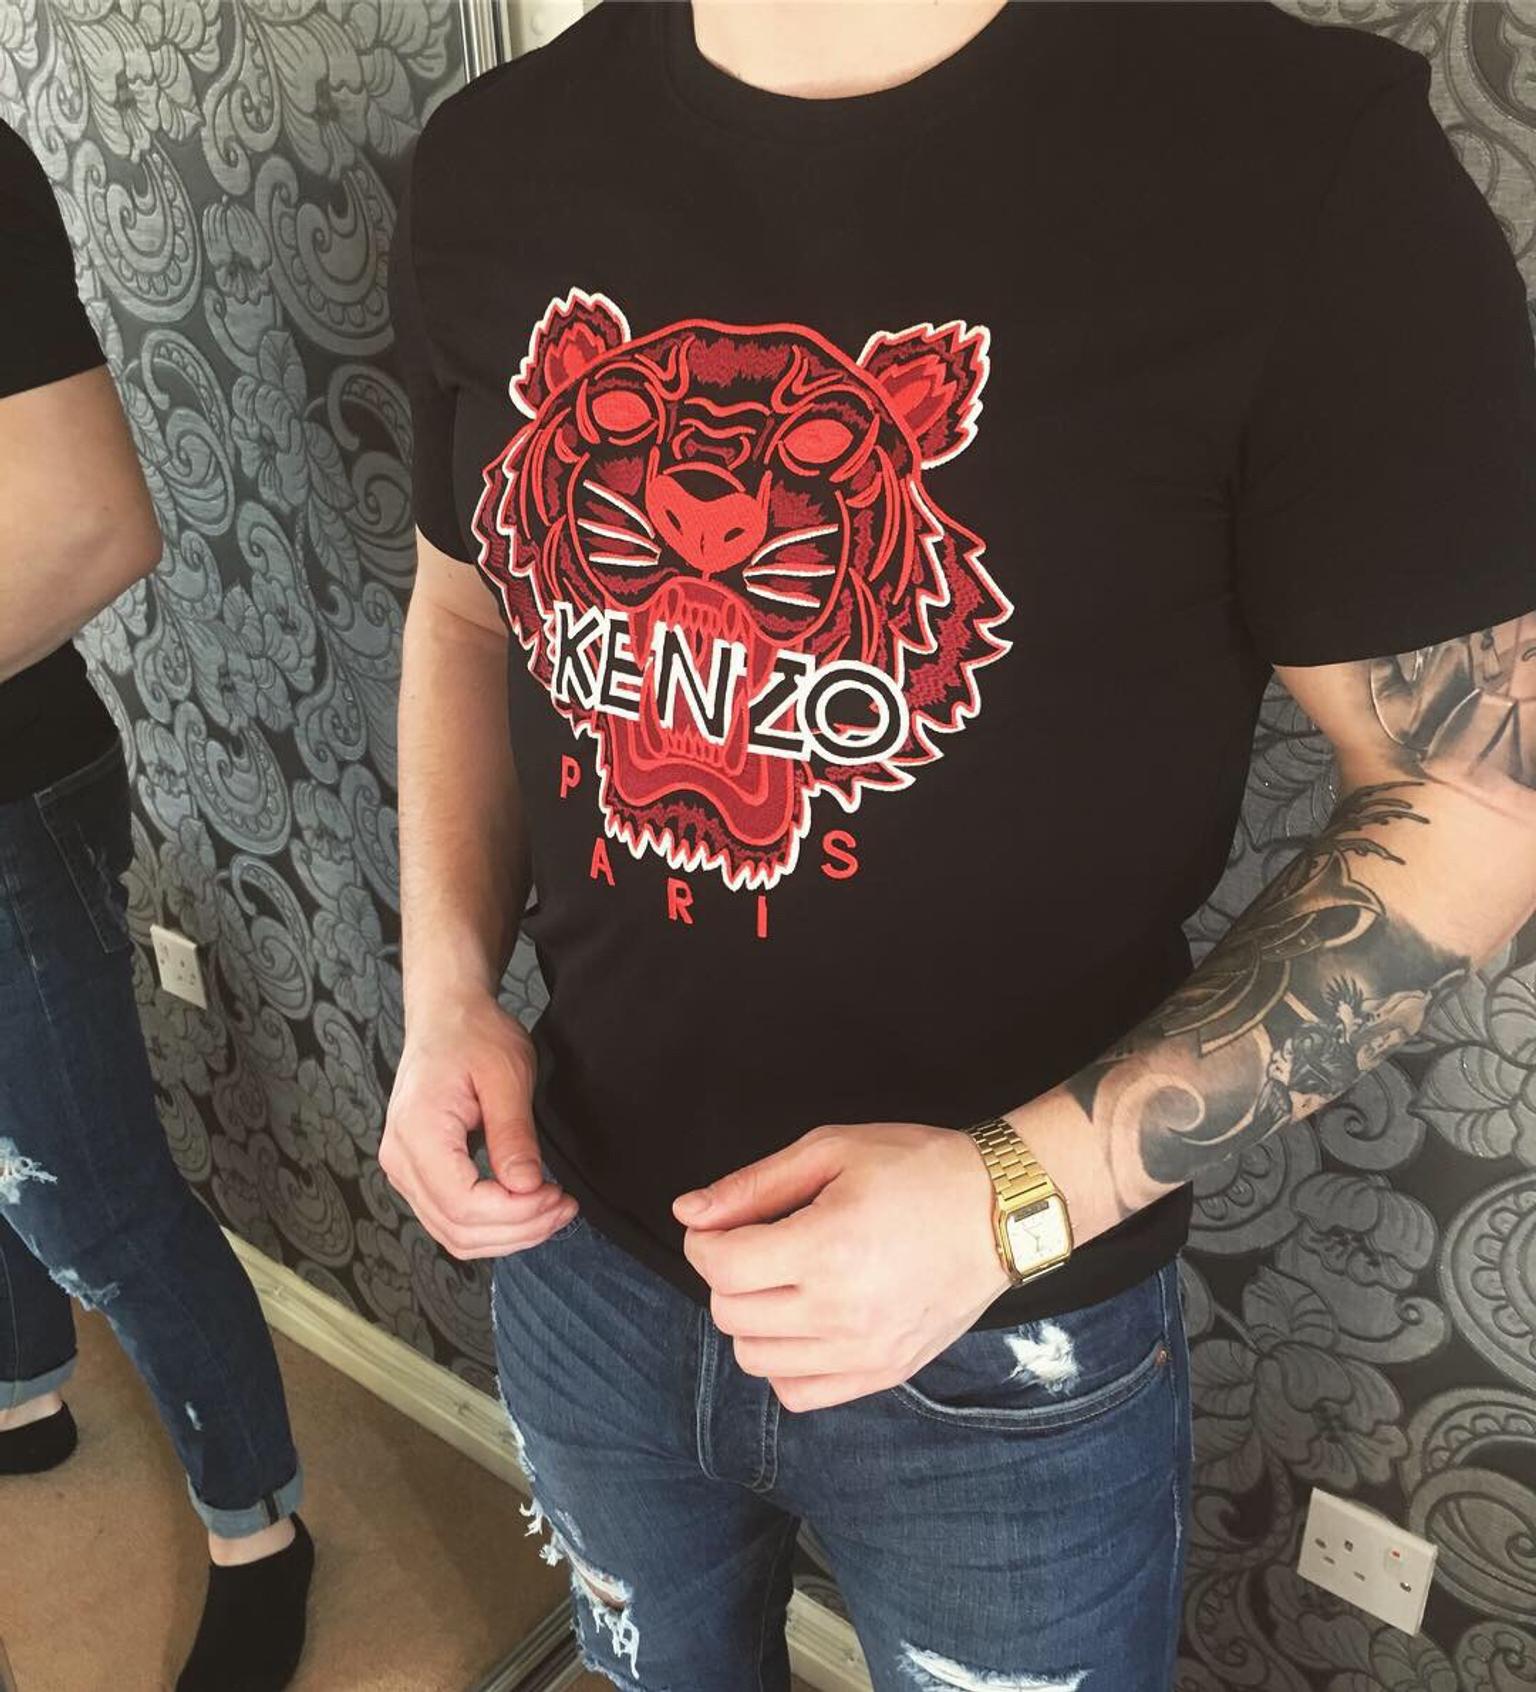 kenzo red tiger t shirt